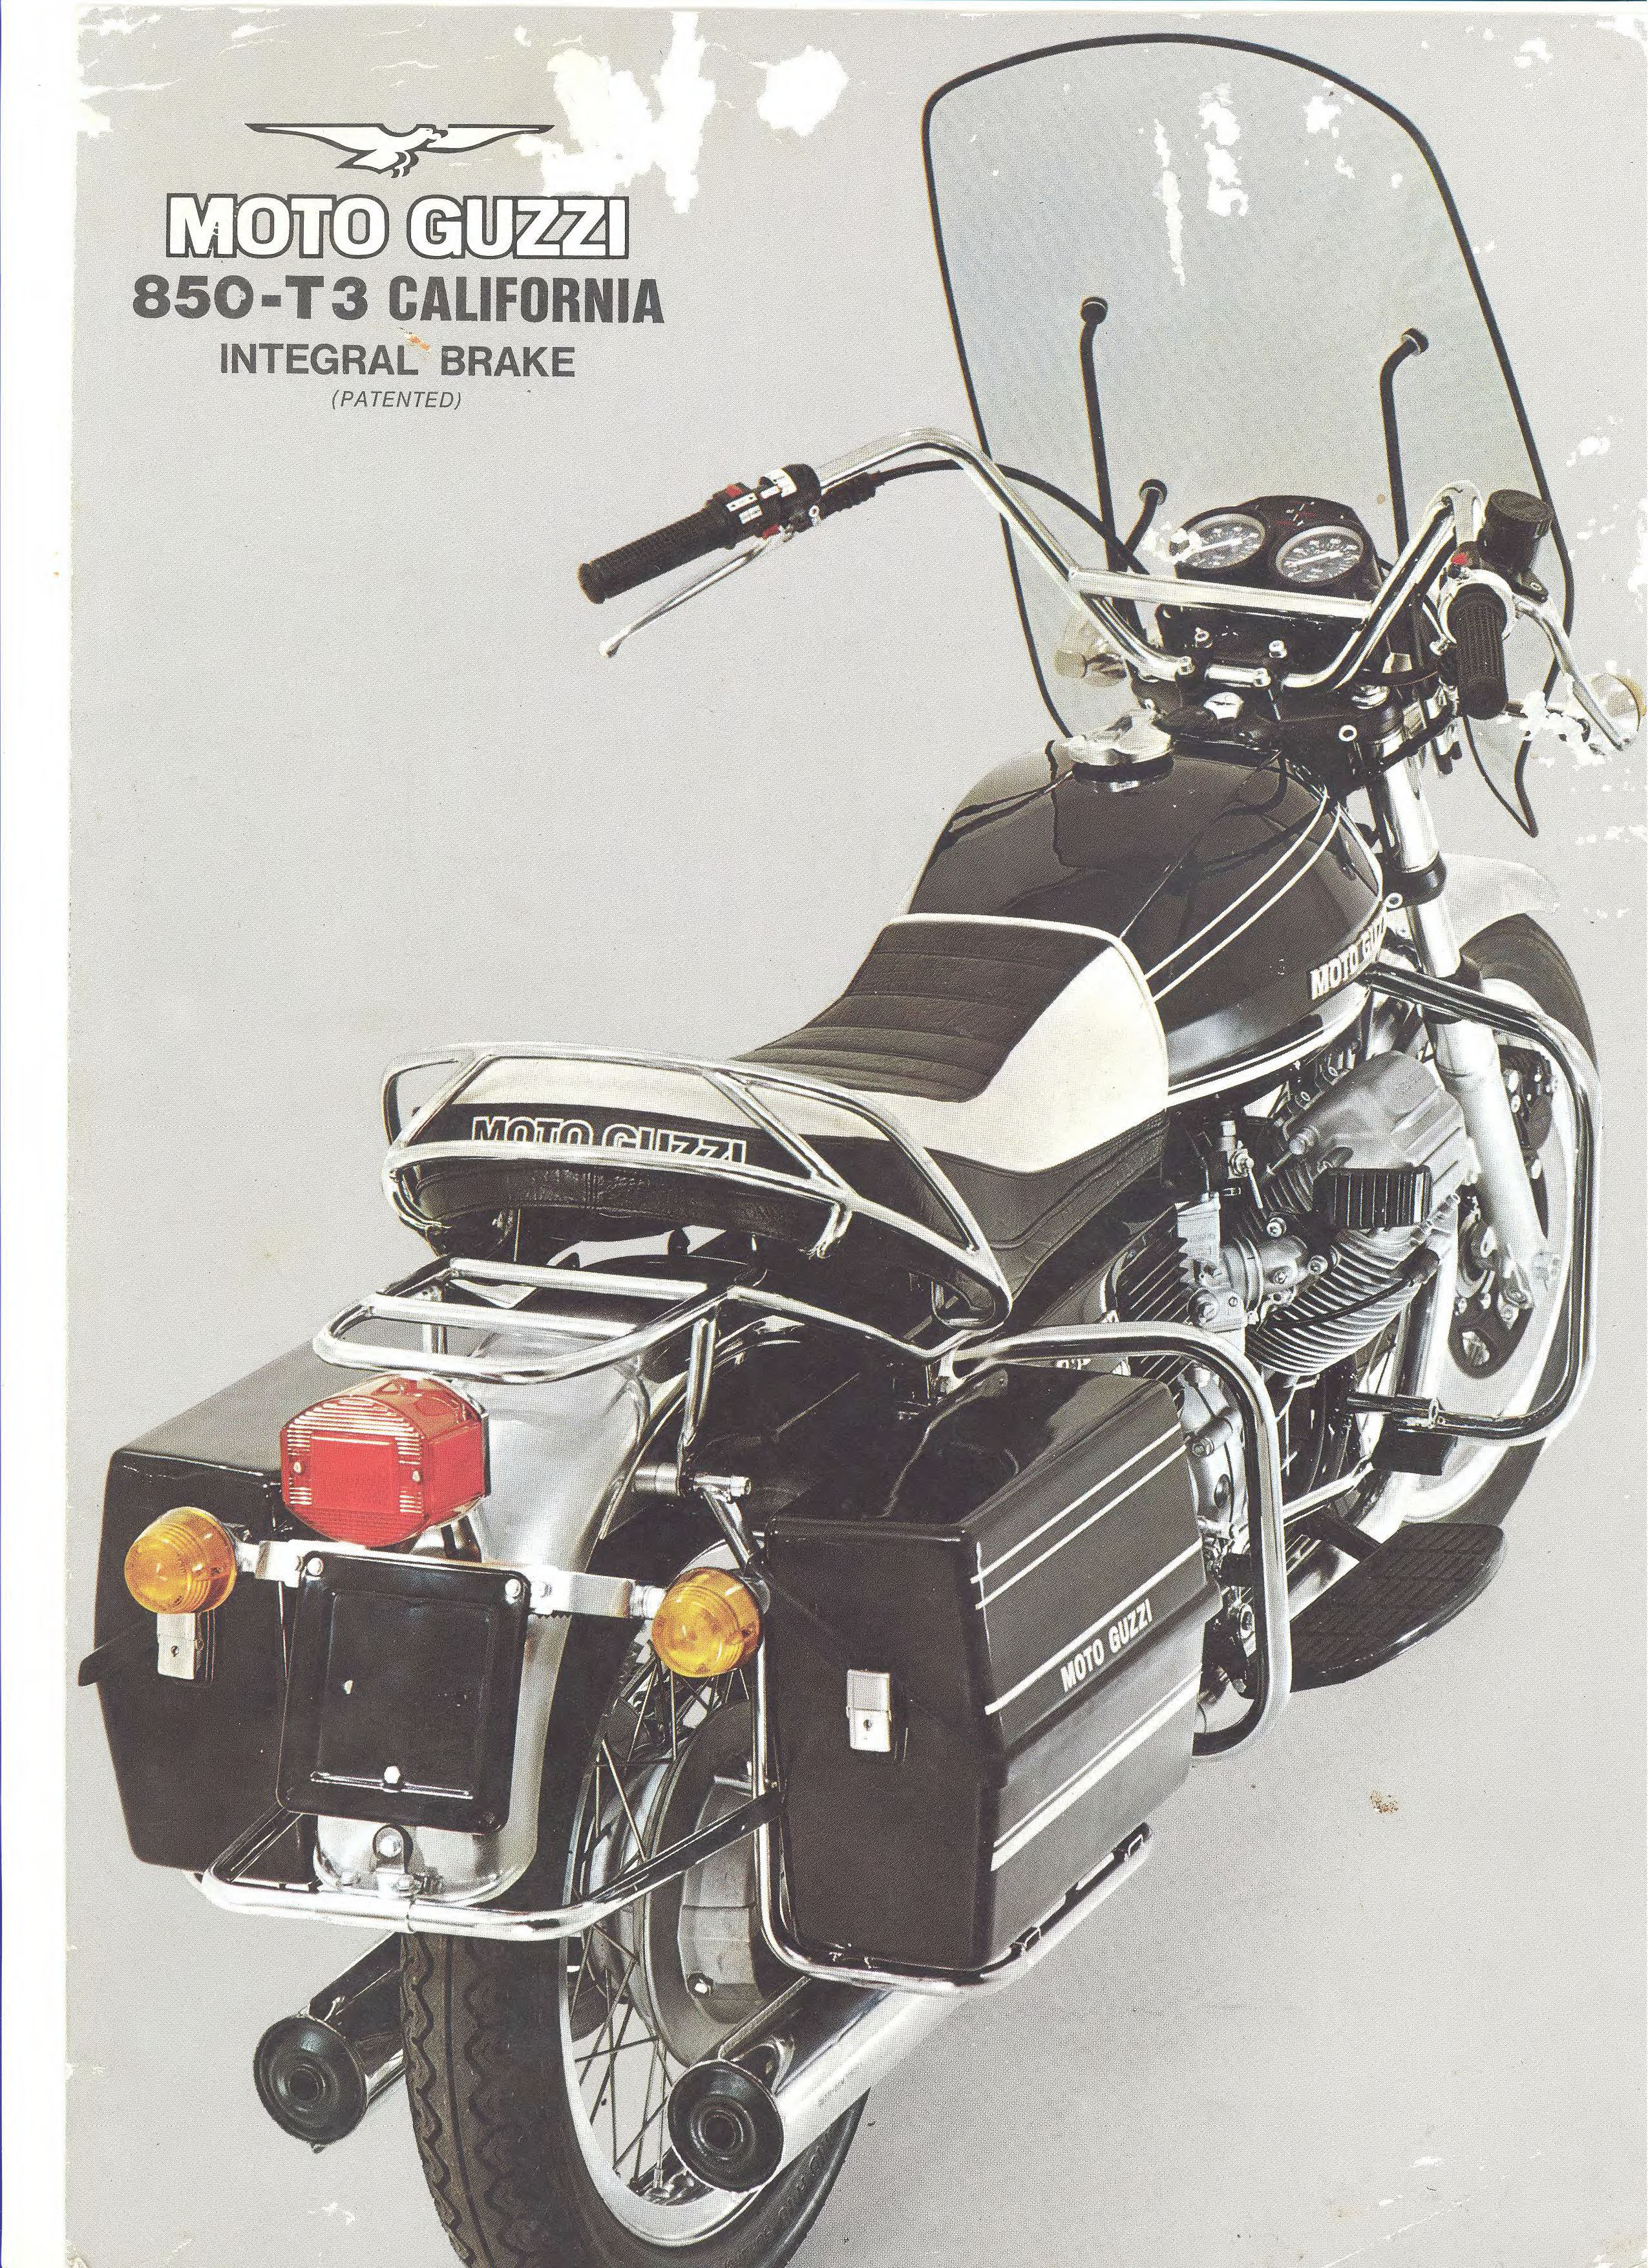 Moto Guzzi factory brochure: 850 T3 California